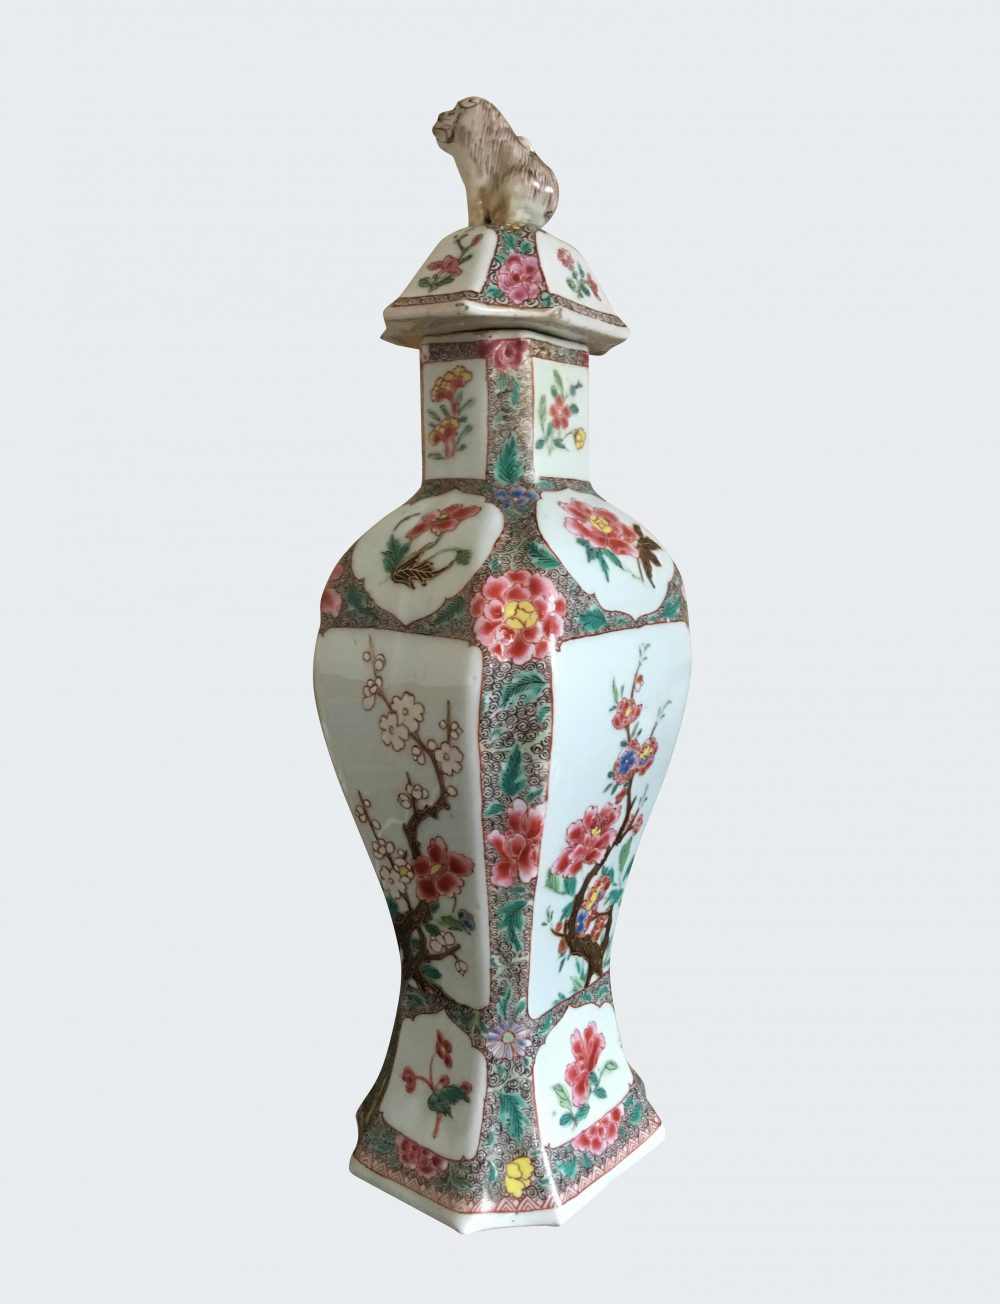 Famille rose Porcelain Qianlong period (1735-1795), circa 1730-1740, China